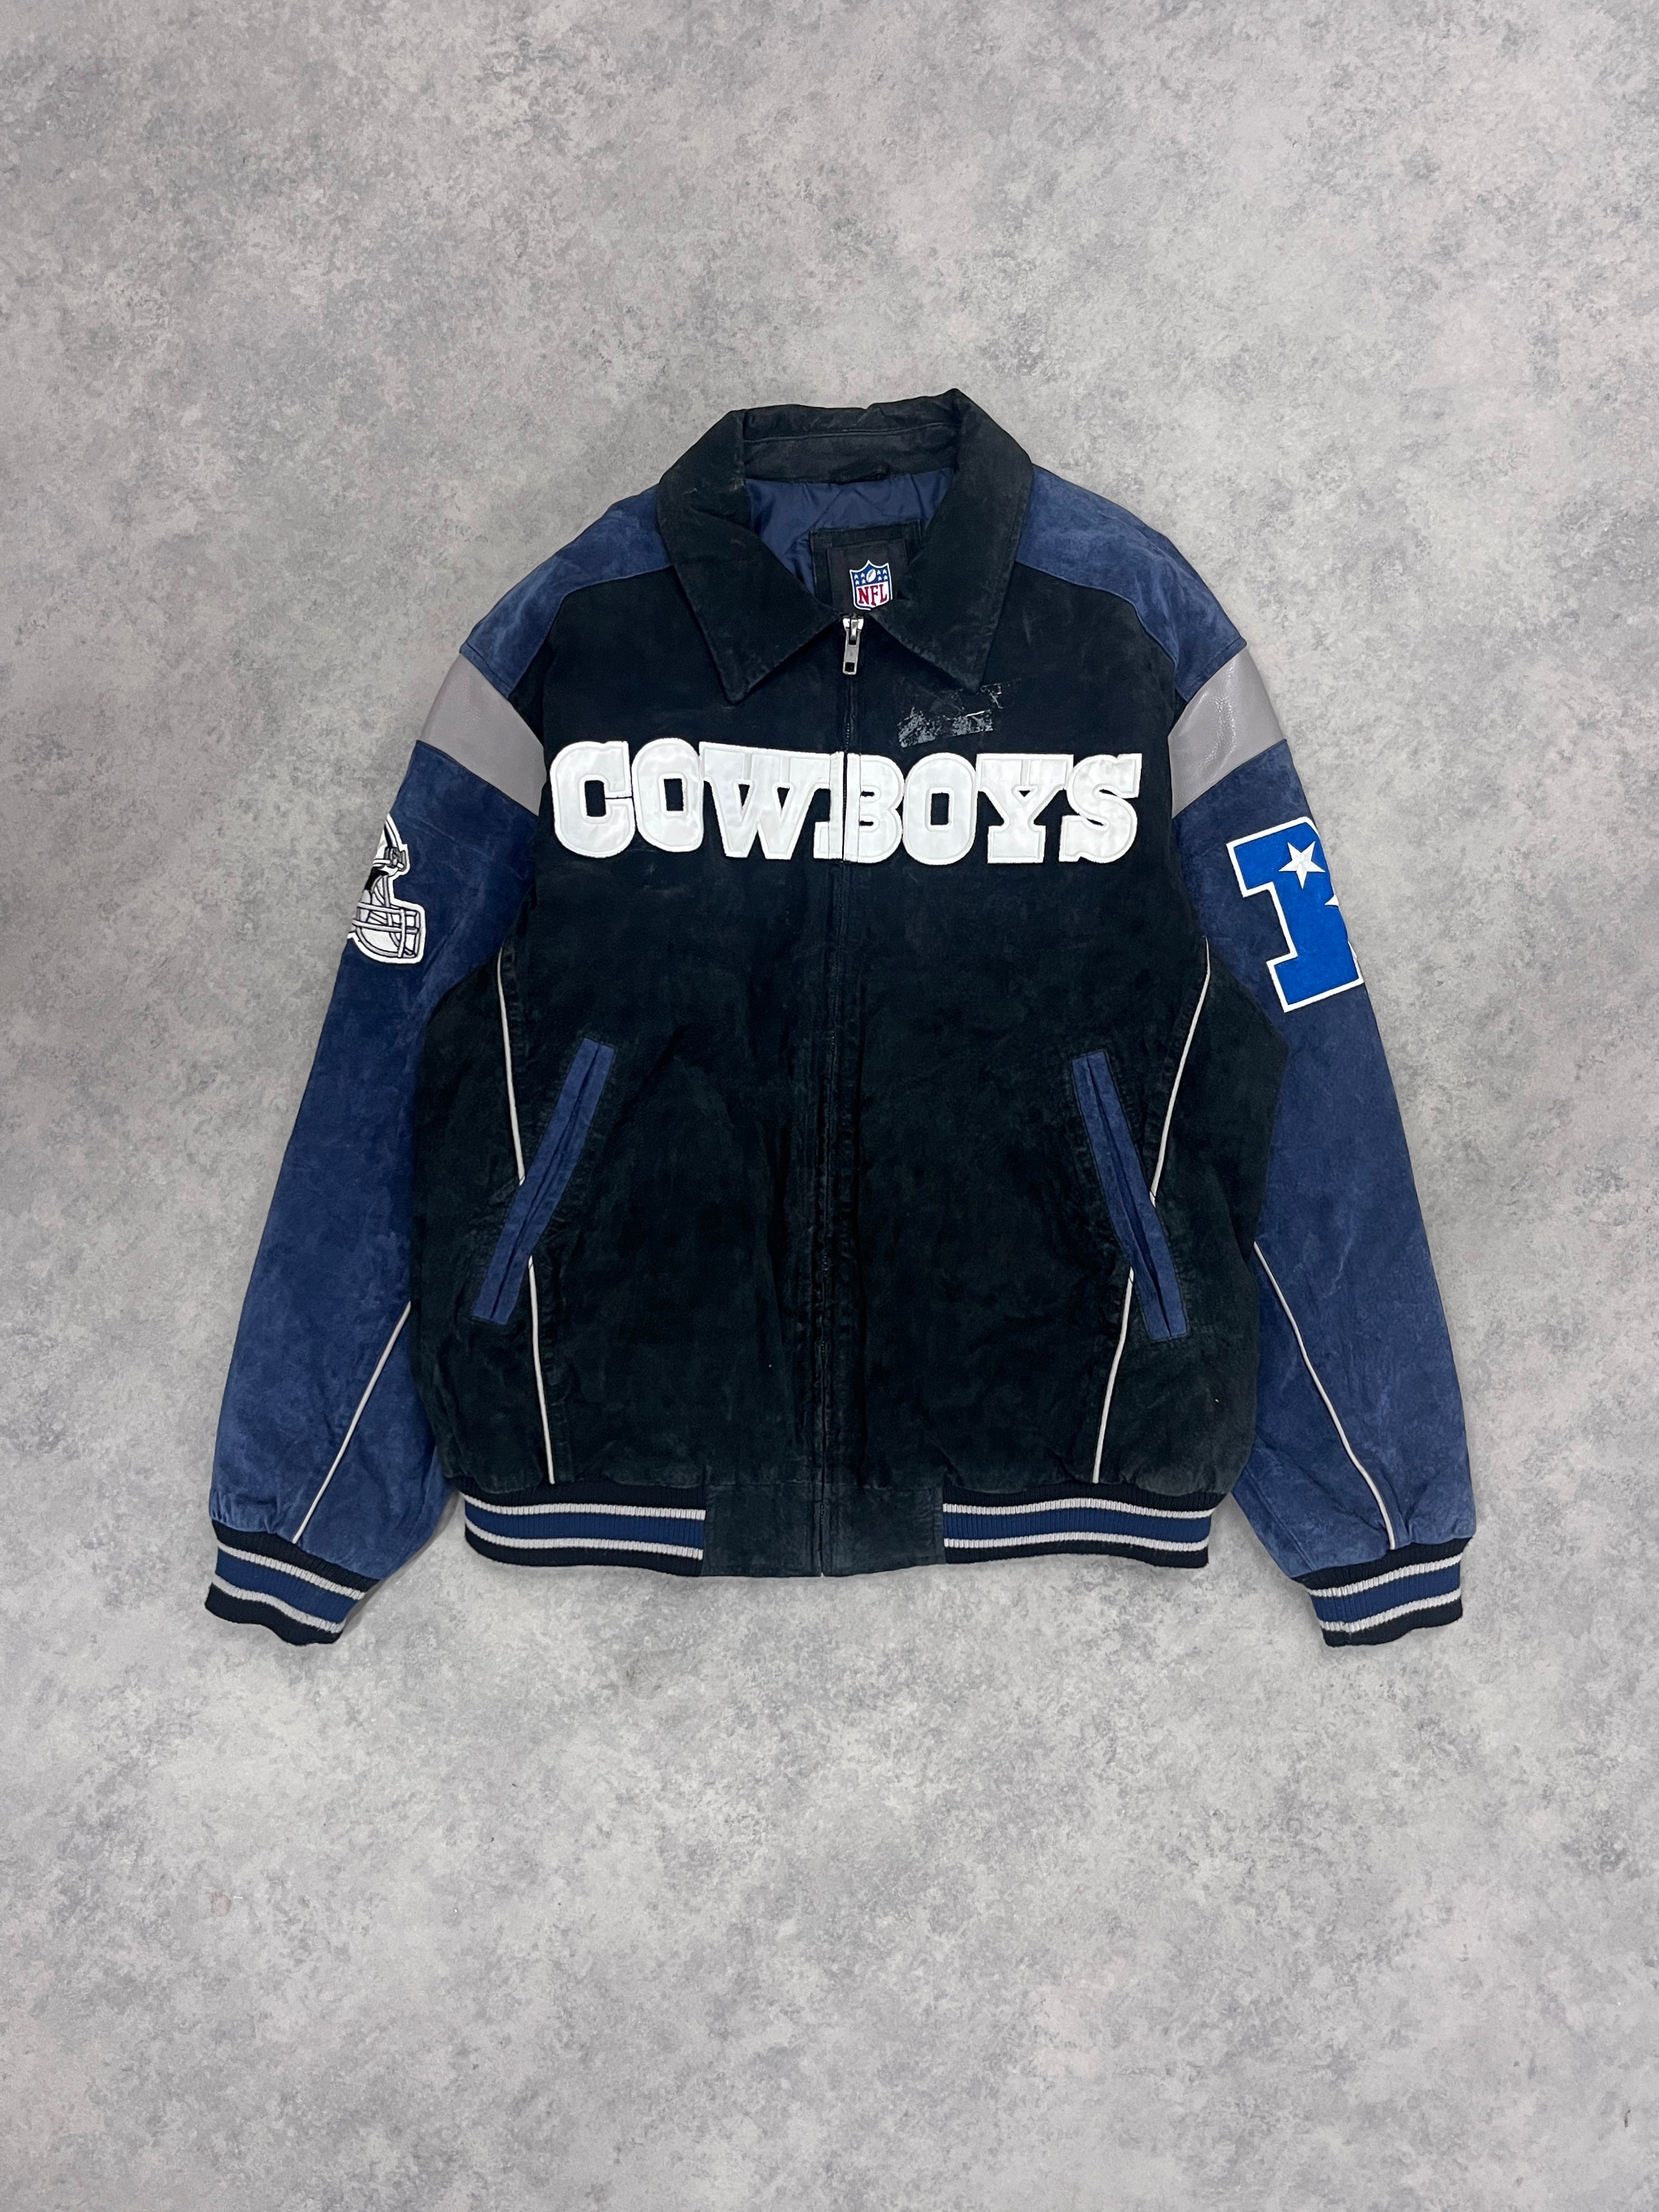 Vintage NFL Cowboys Varsity Jacket Blue // X-Large - RHAGHOUSE VINTAGE